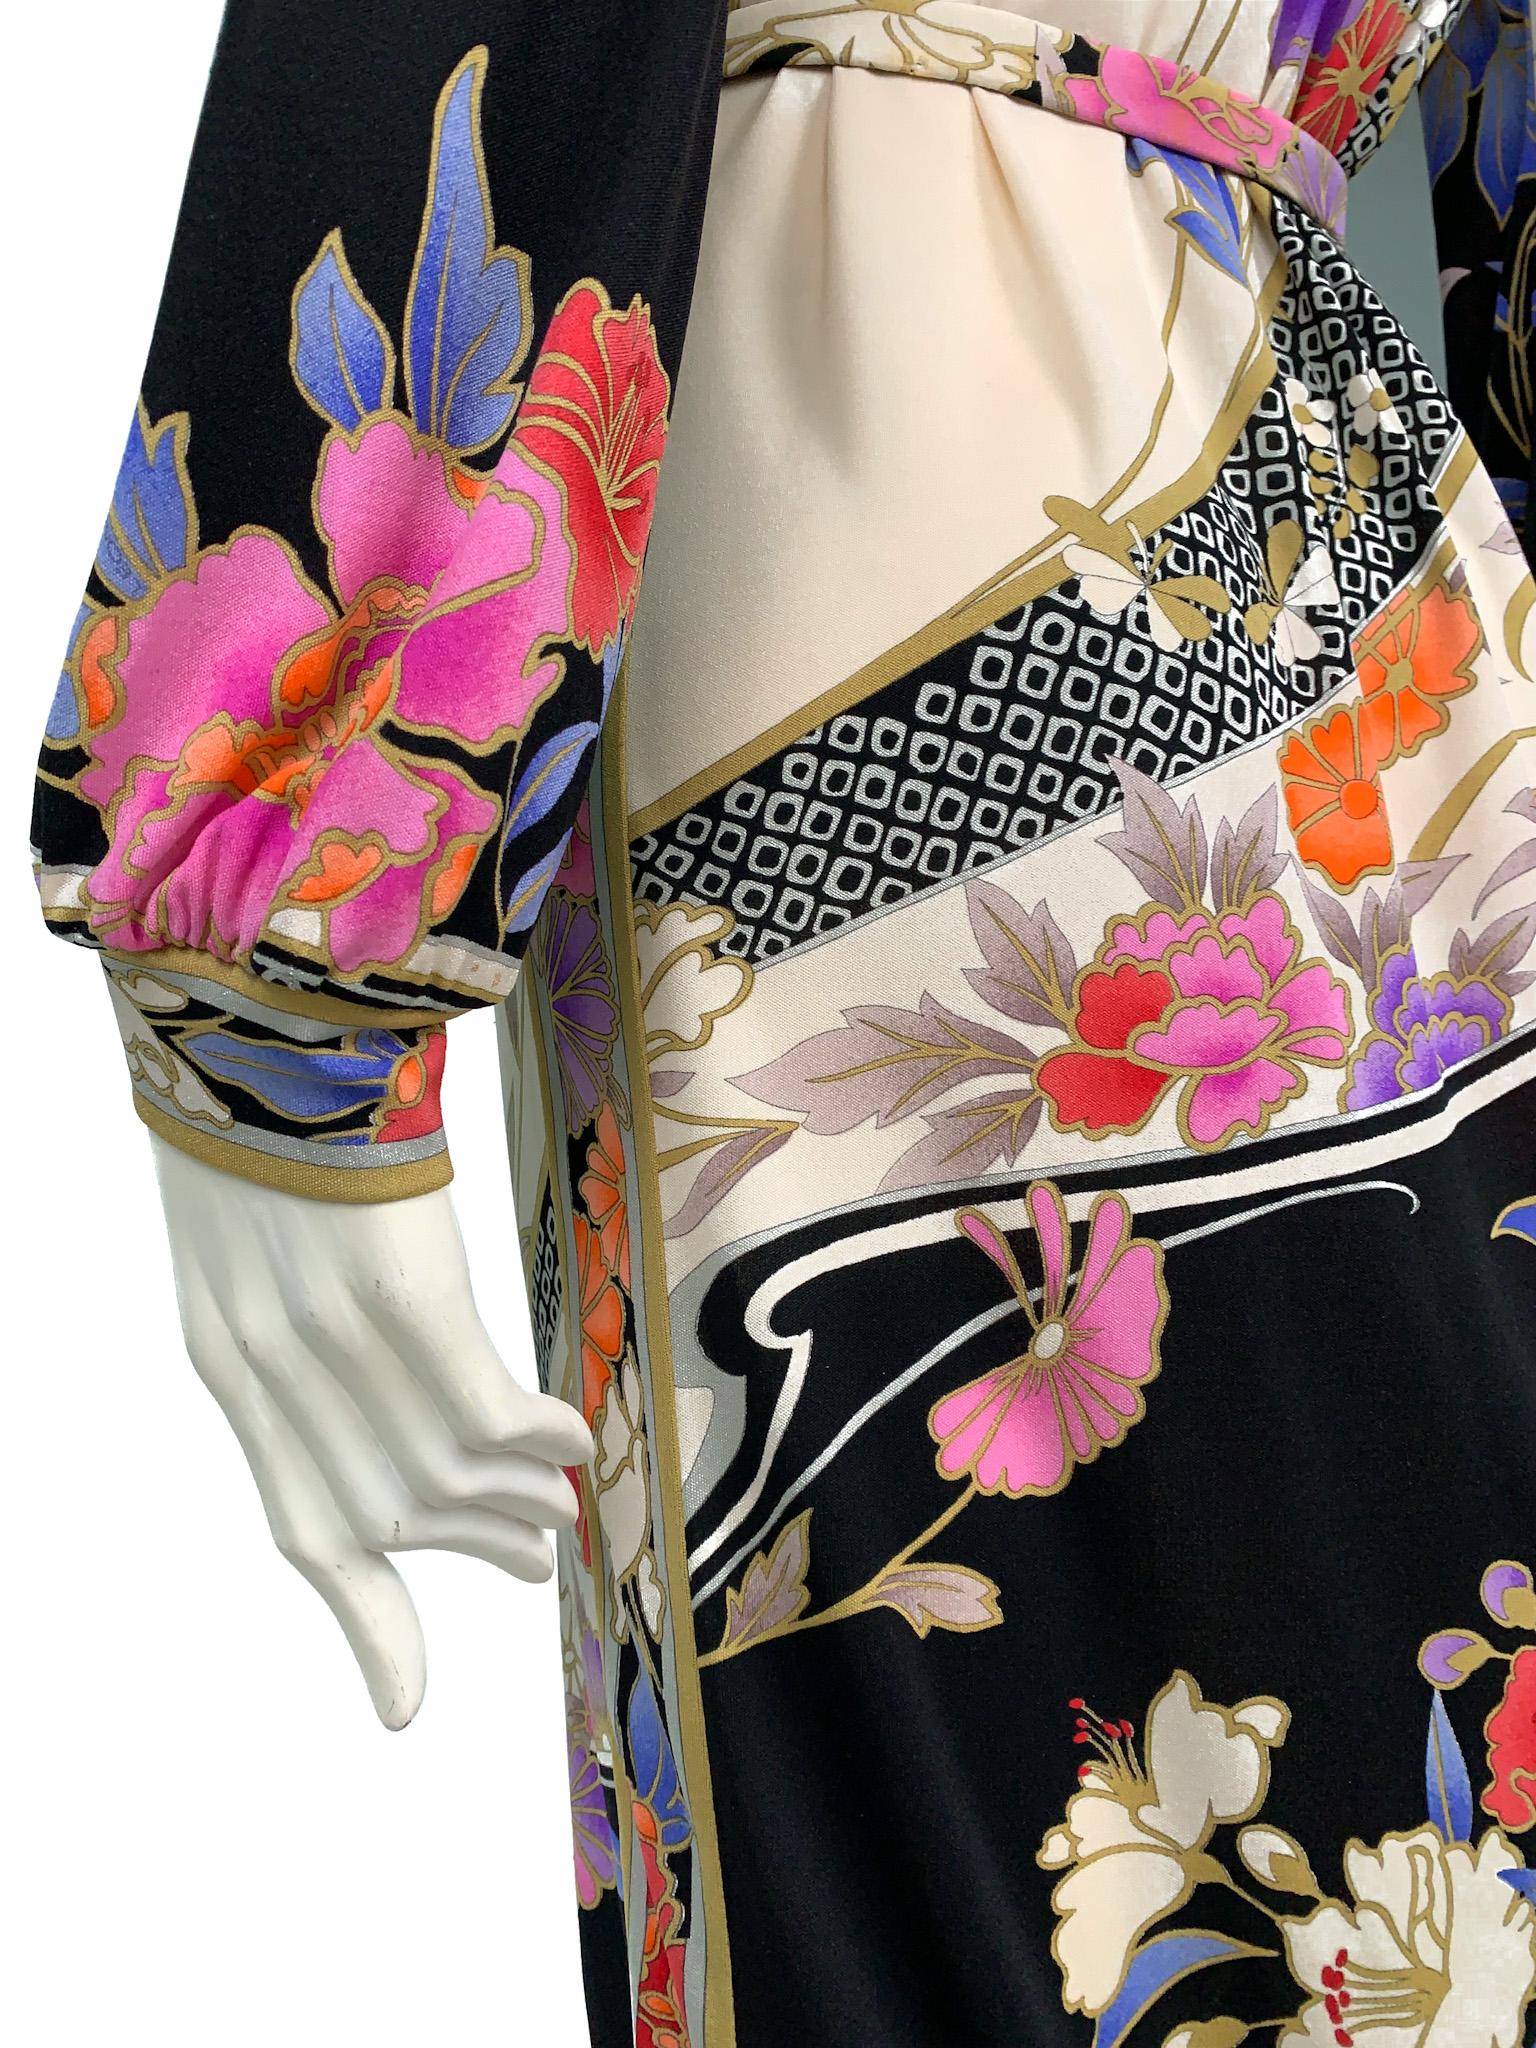 Leonard Paris printed dress in 100% mikado silk jersey. 5